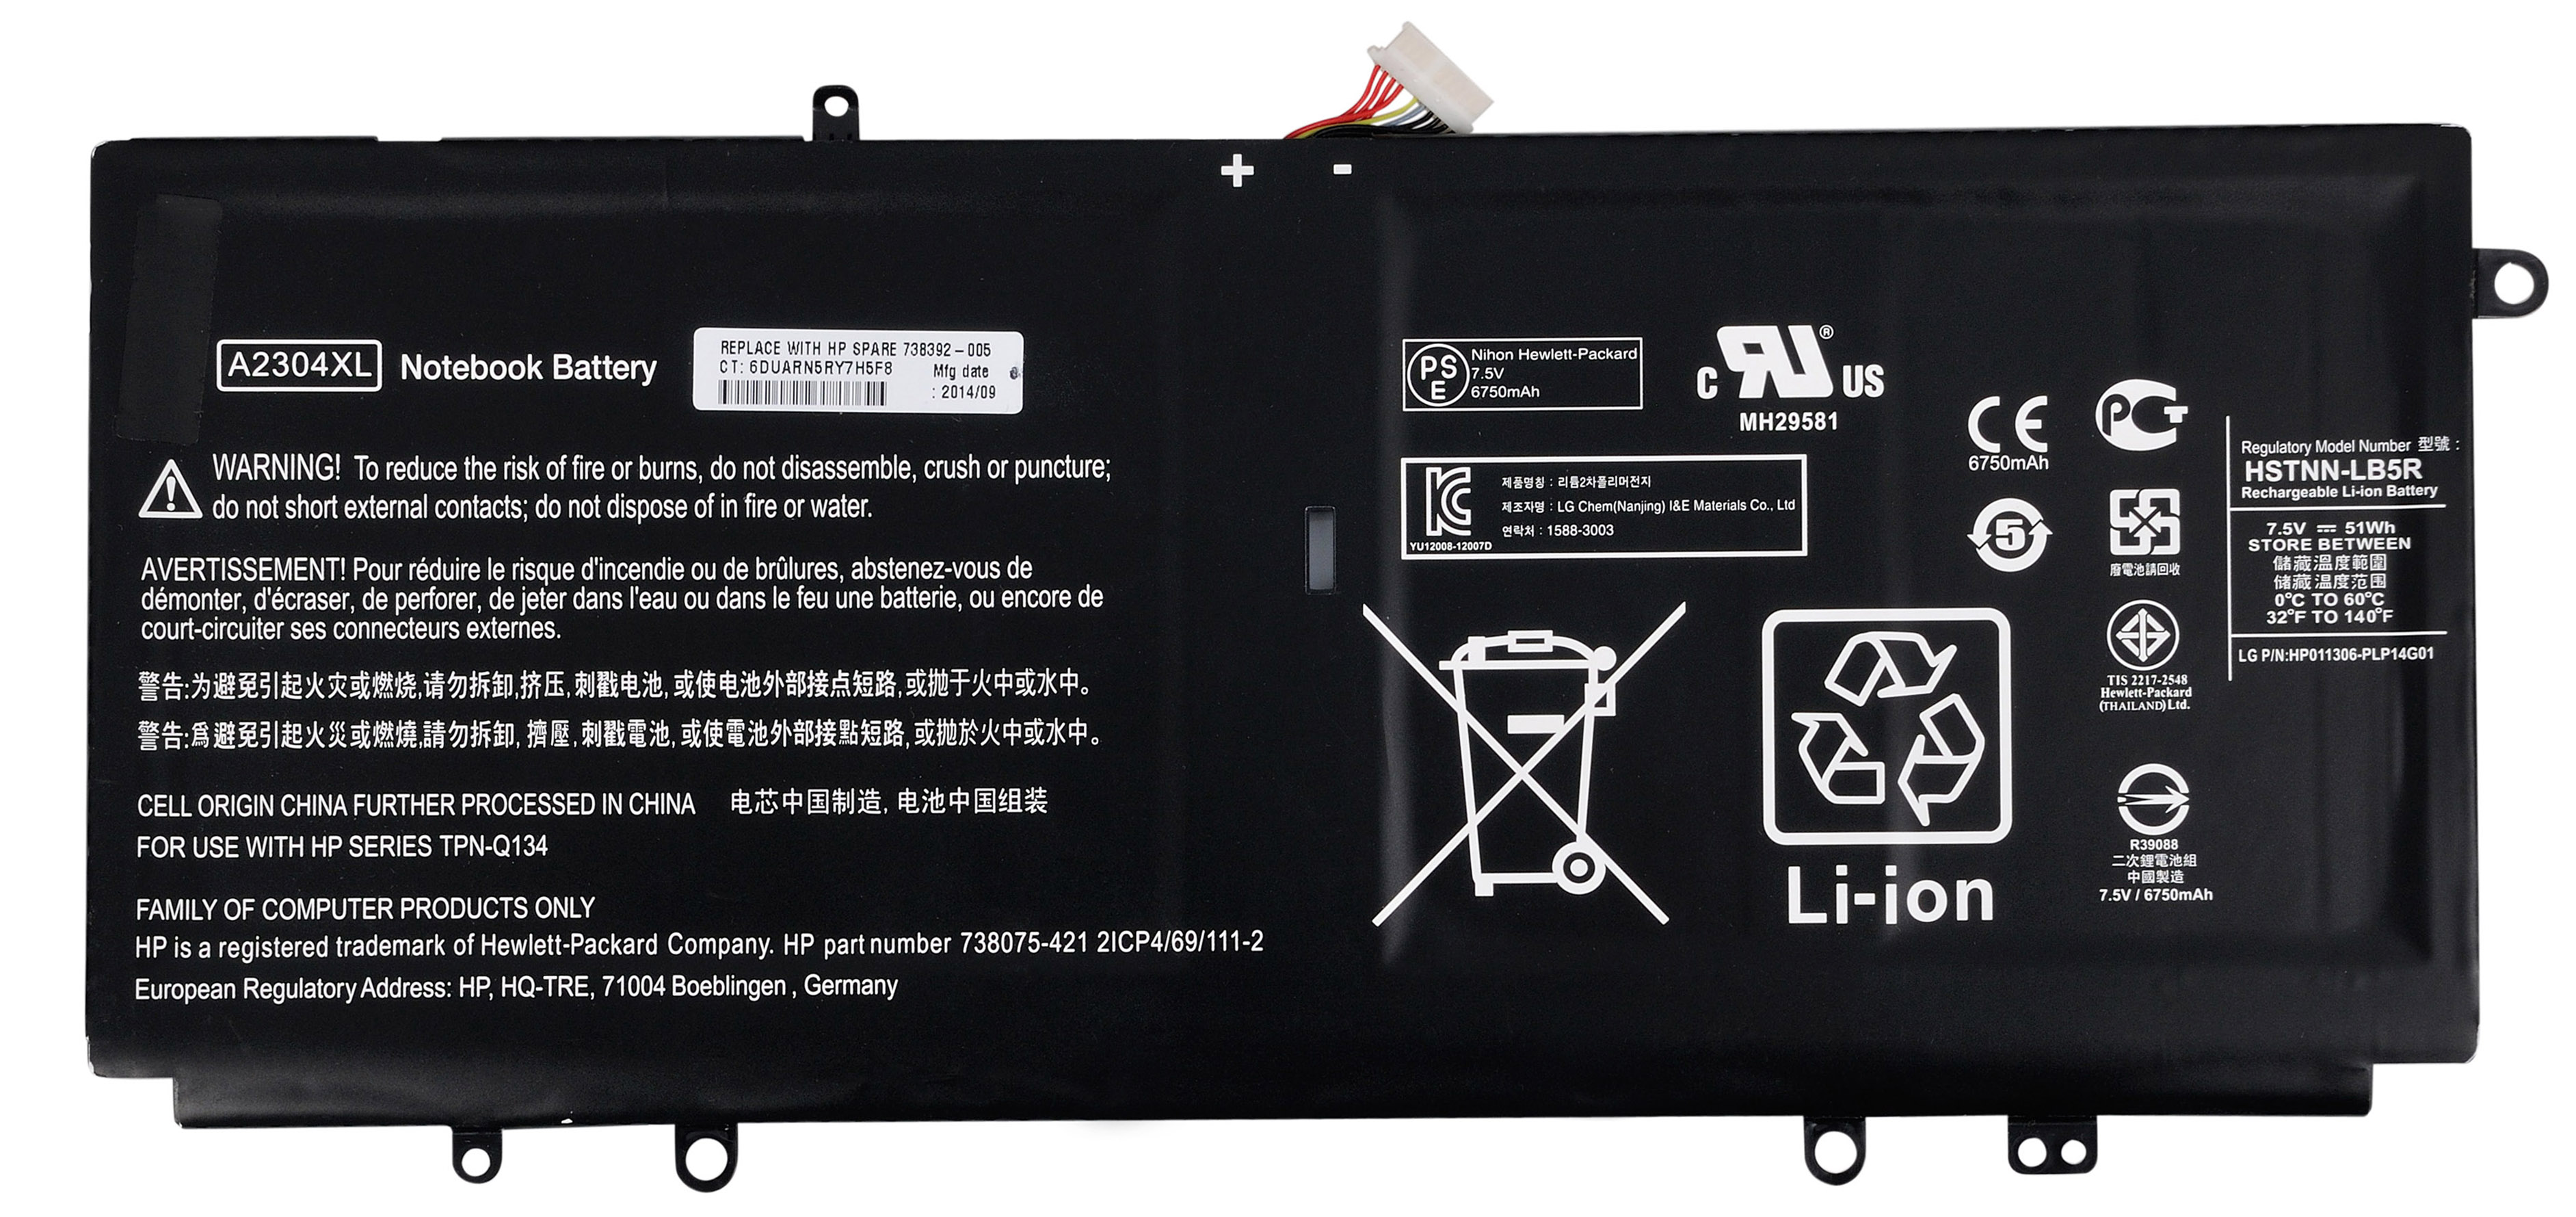 Аккумулятор HP Chromebook 14, (A2304XL), 51Wh, 7.4V, ORG  